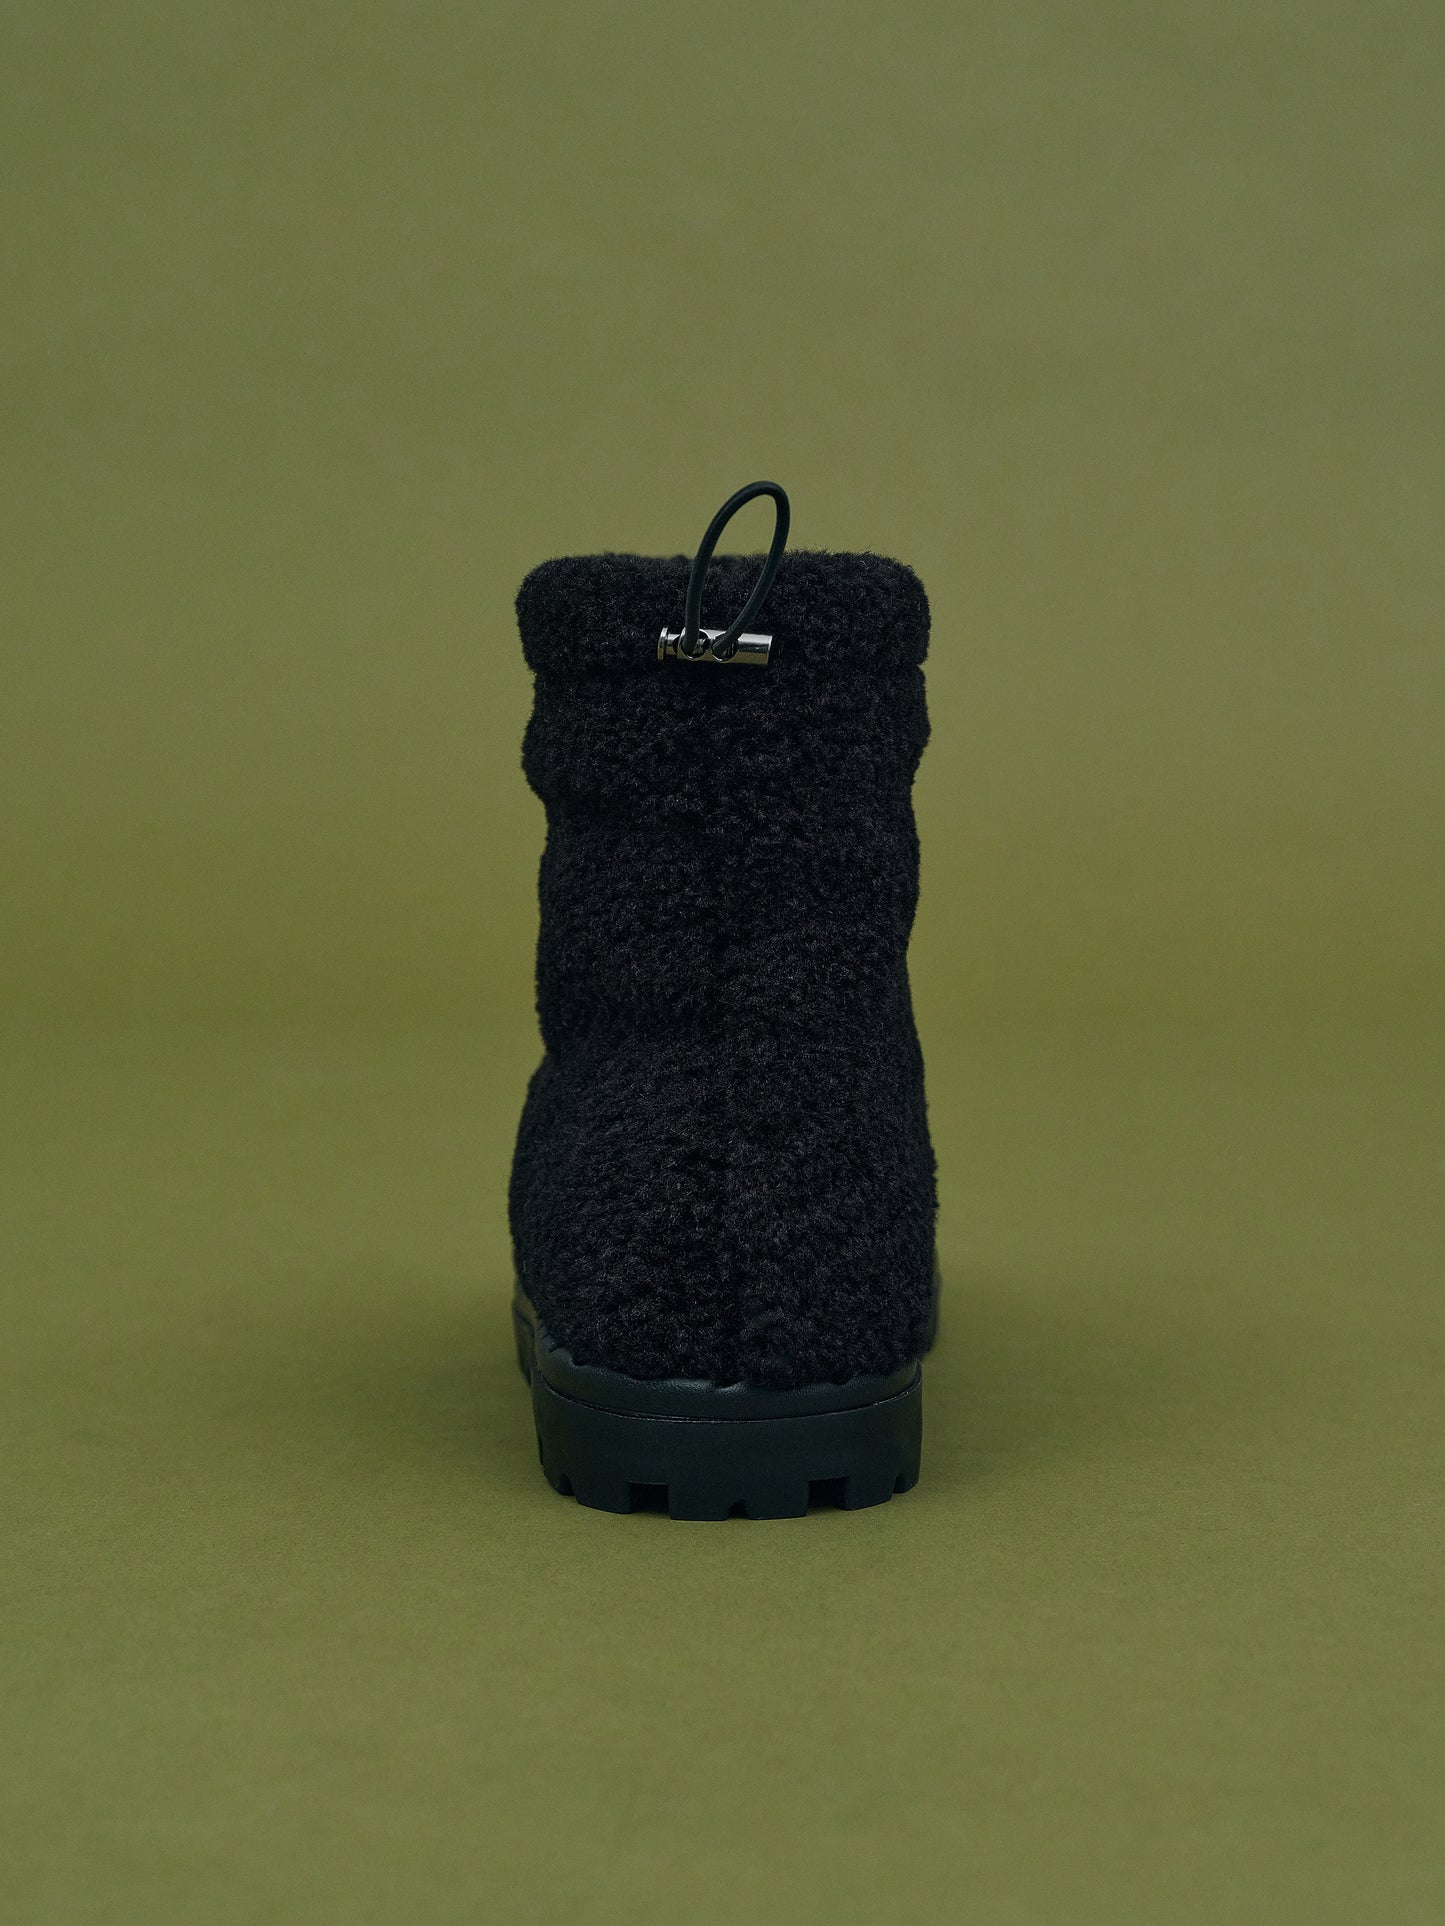 Ankle-High Faux Fur Boots, Black